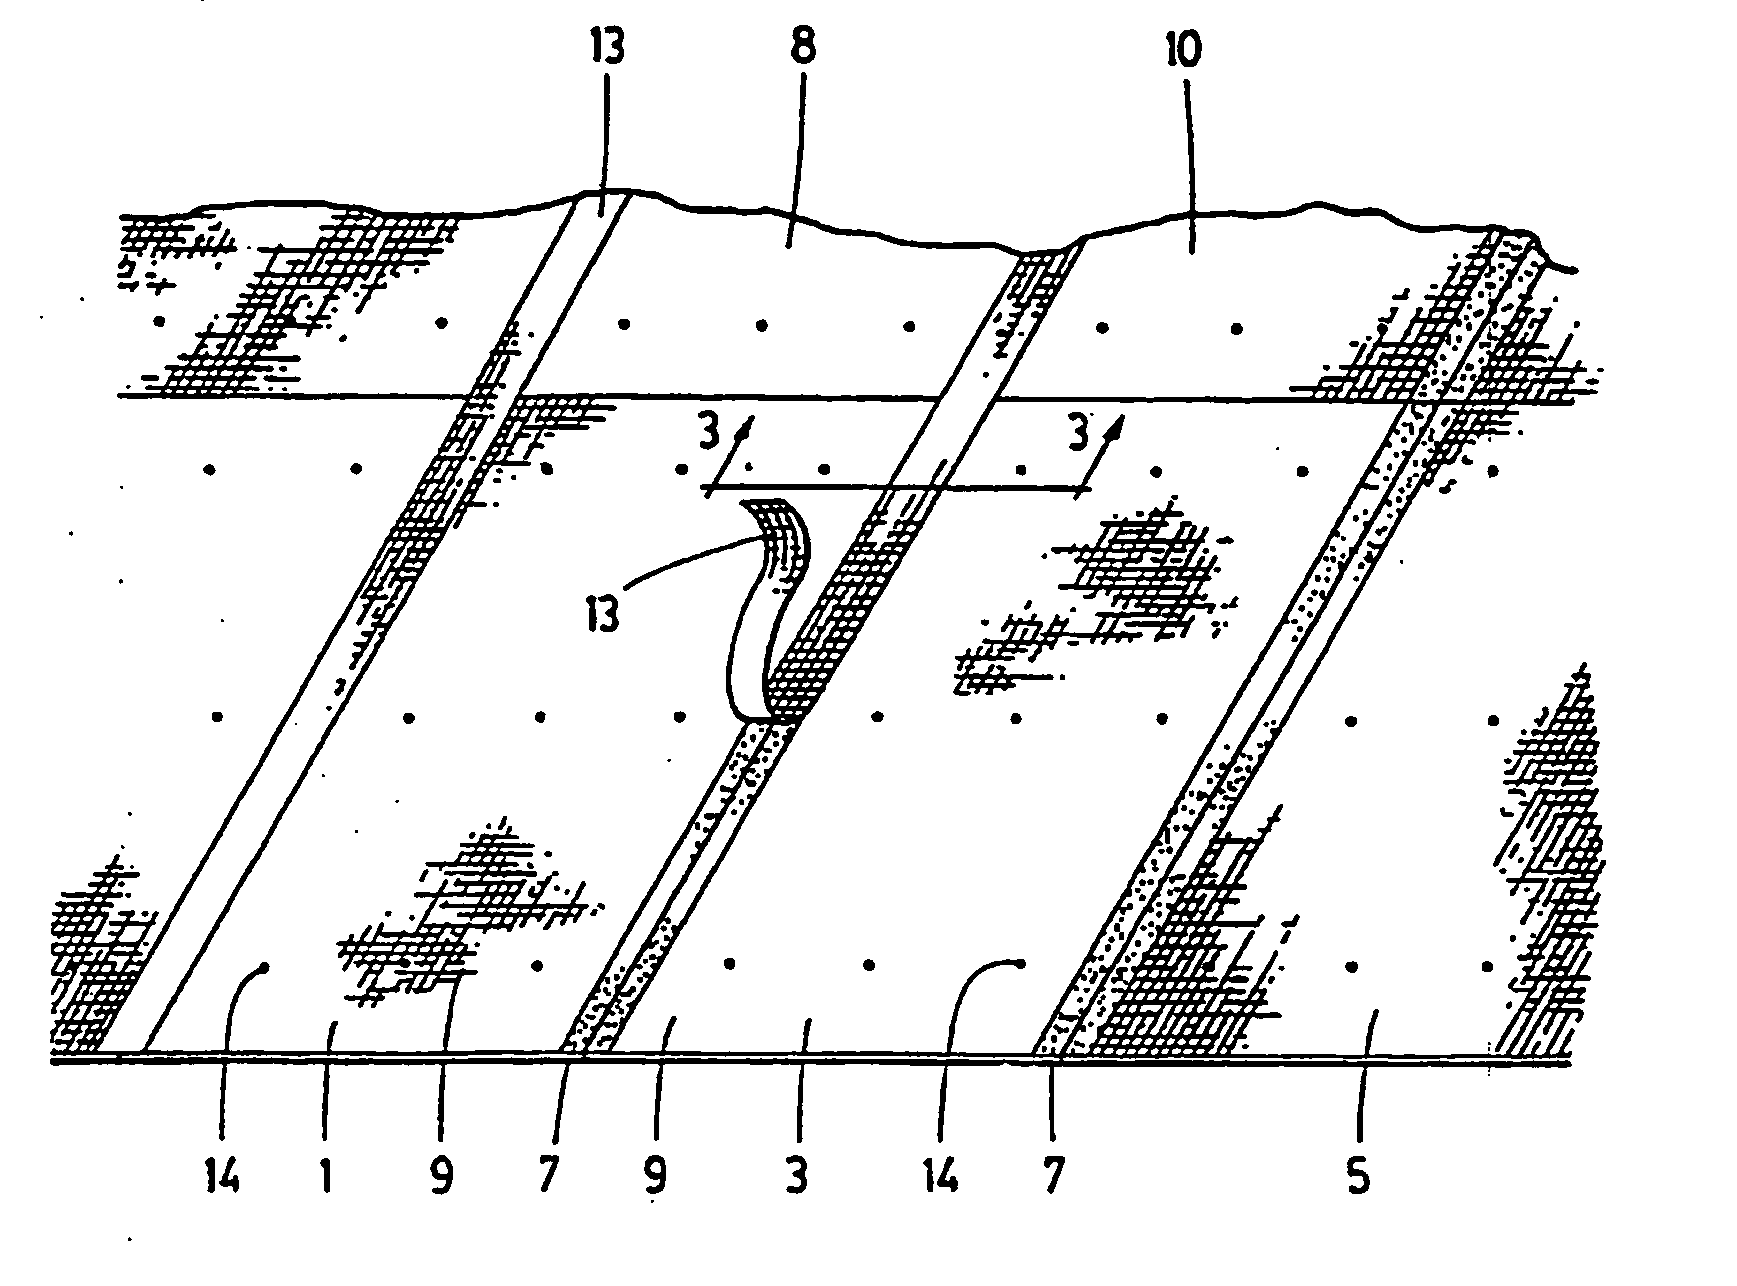 Anchor sheet and anchor sheet module